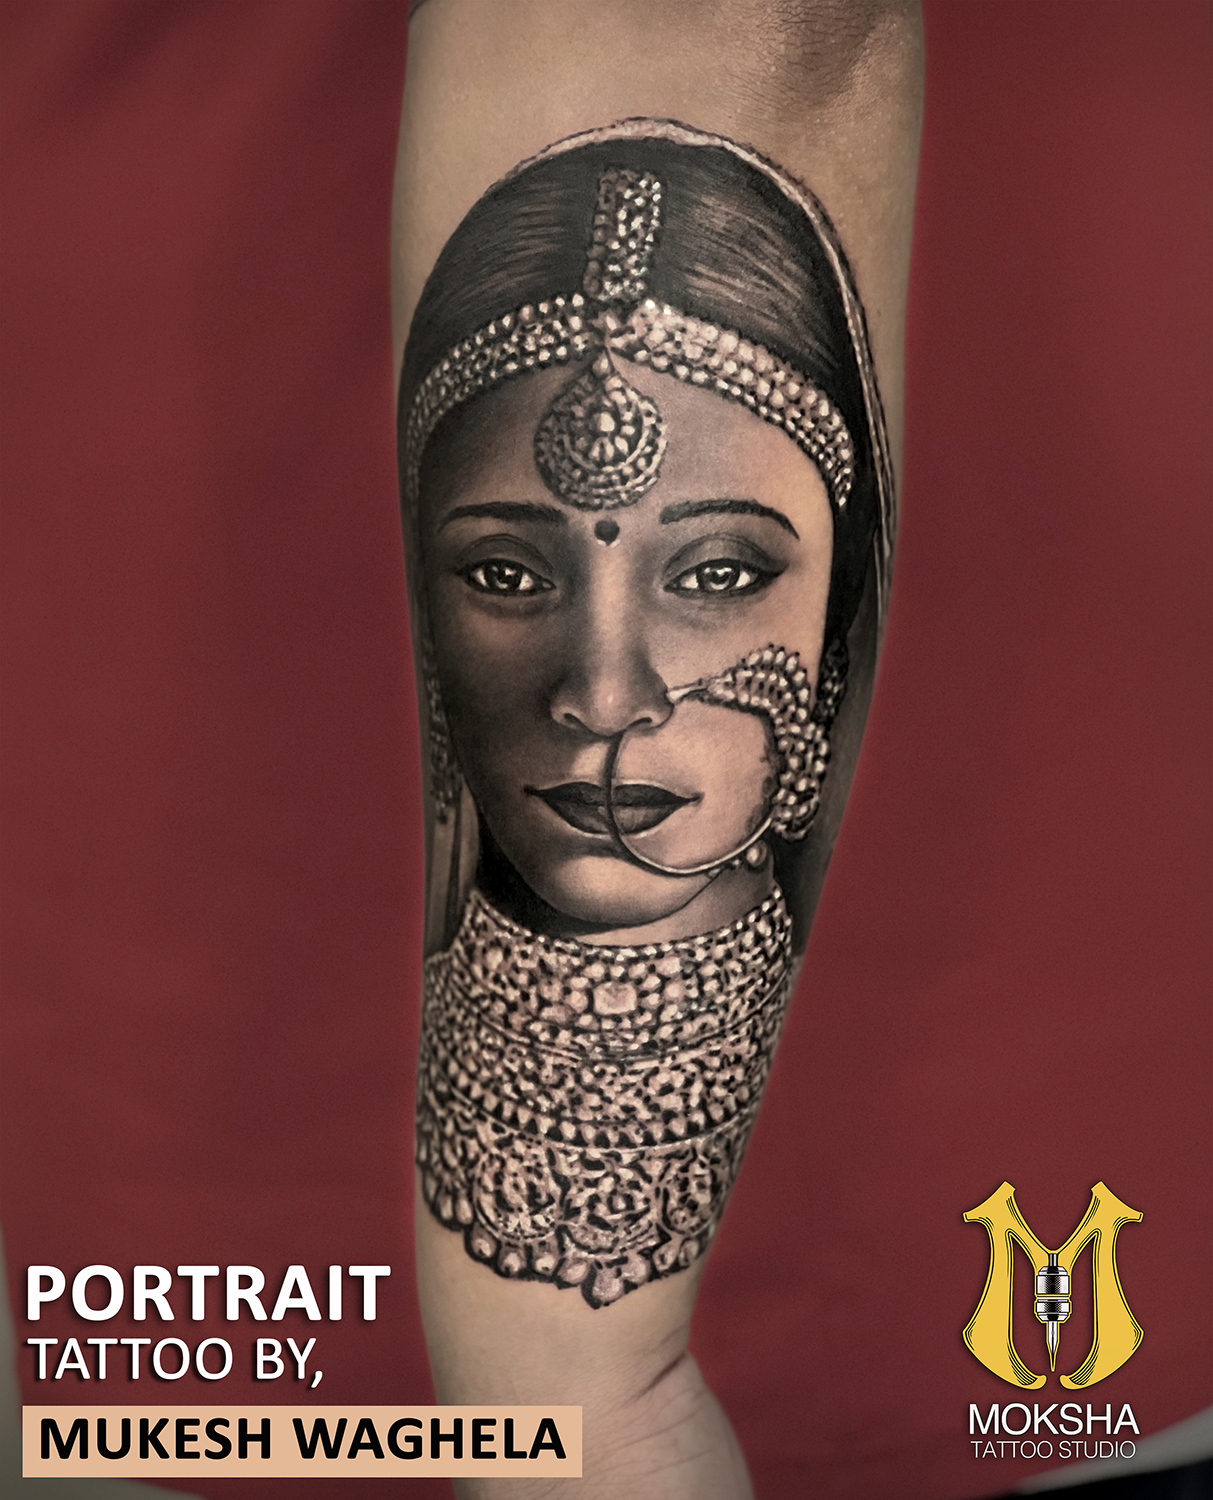 Portrait Tattoo By Mukesh Waghela The Best Tattoo Artist In Goa At Moksha  Tattoo Studio Goa India. -